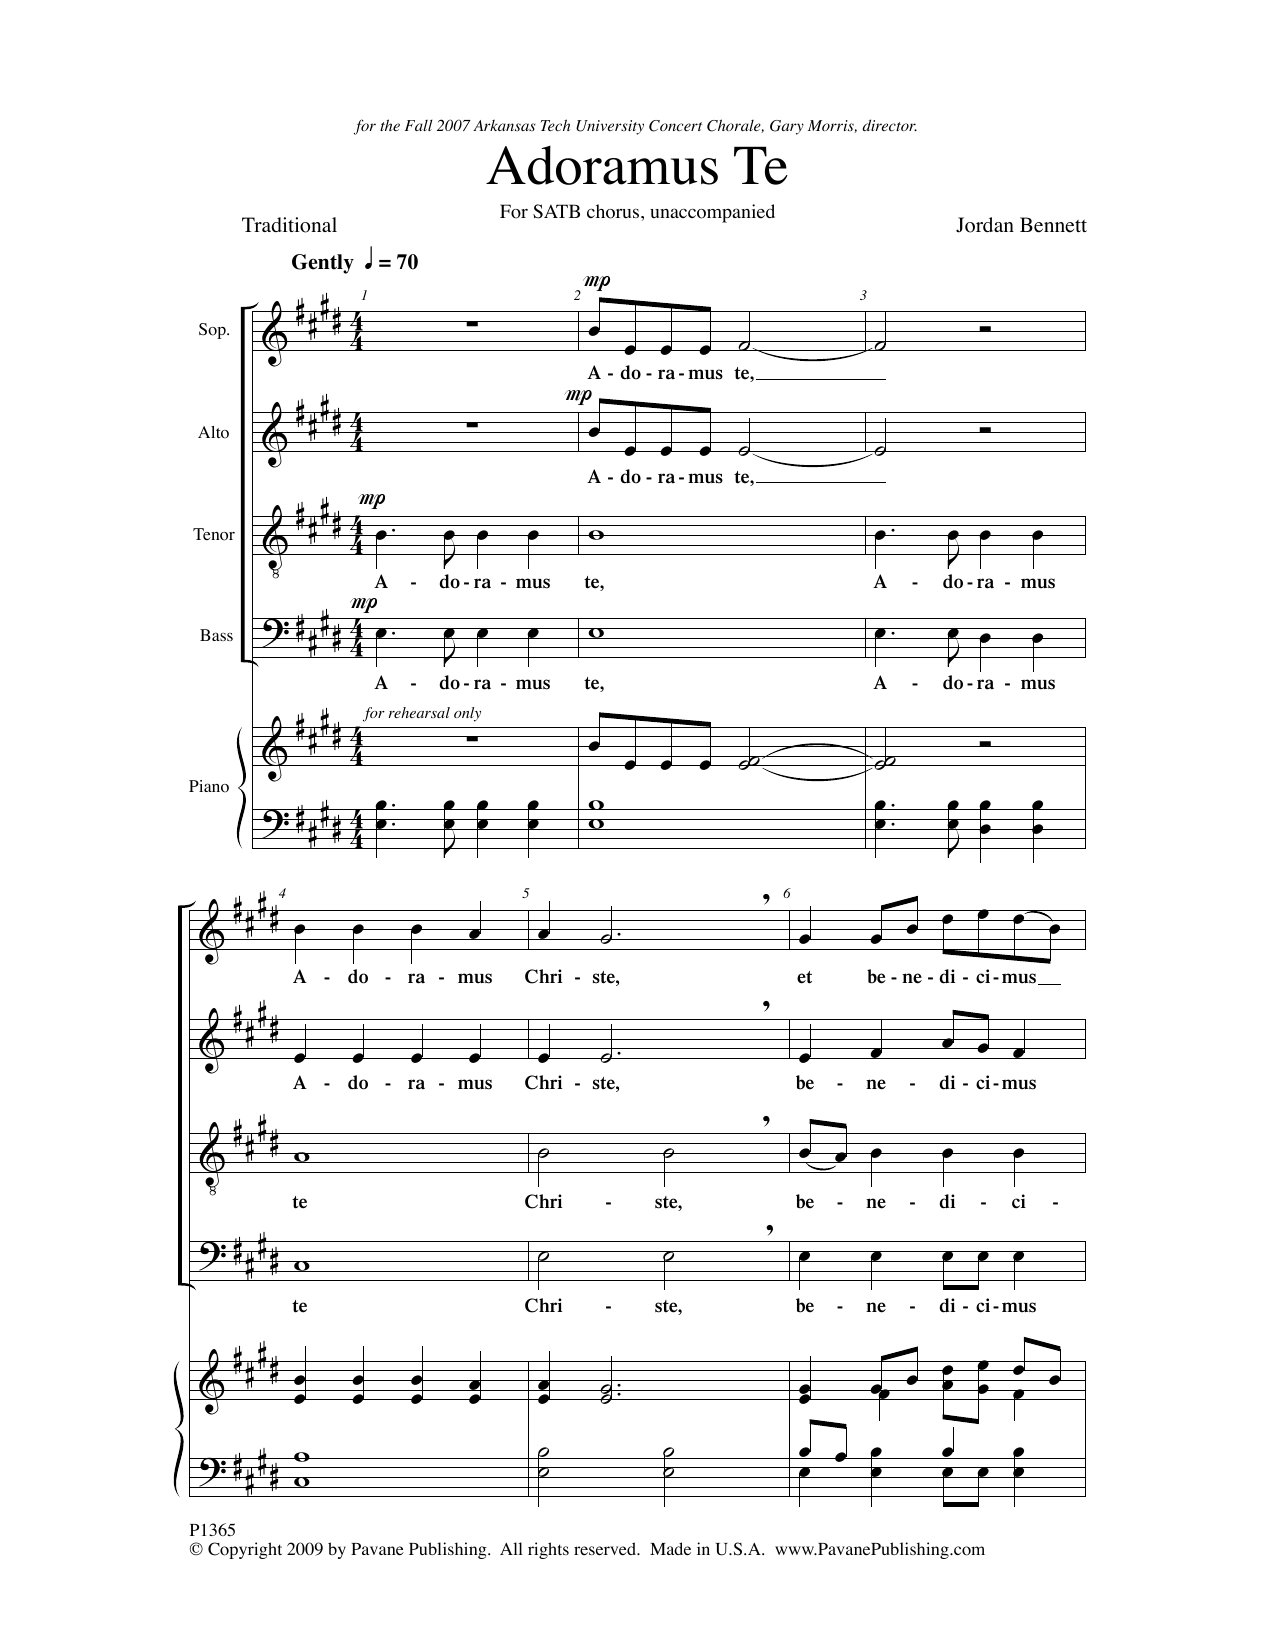 Jordan Bennett Adoramus Te sheet music notes and chords arranged for SATB Choir